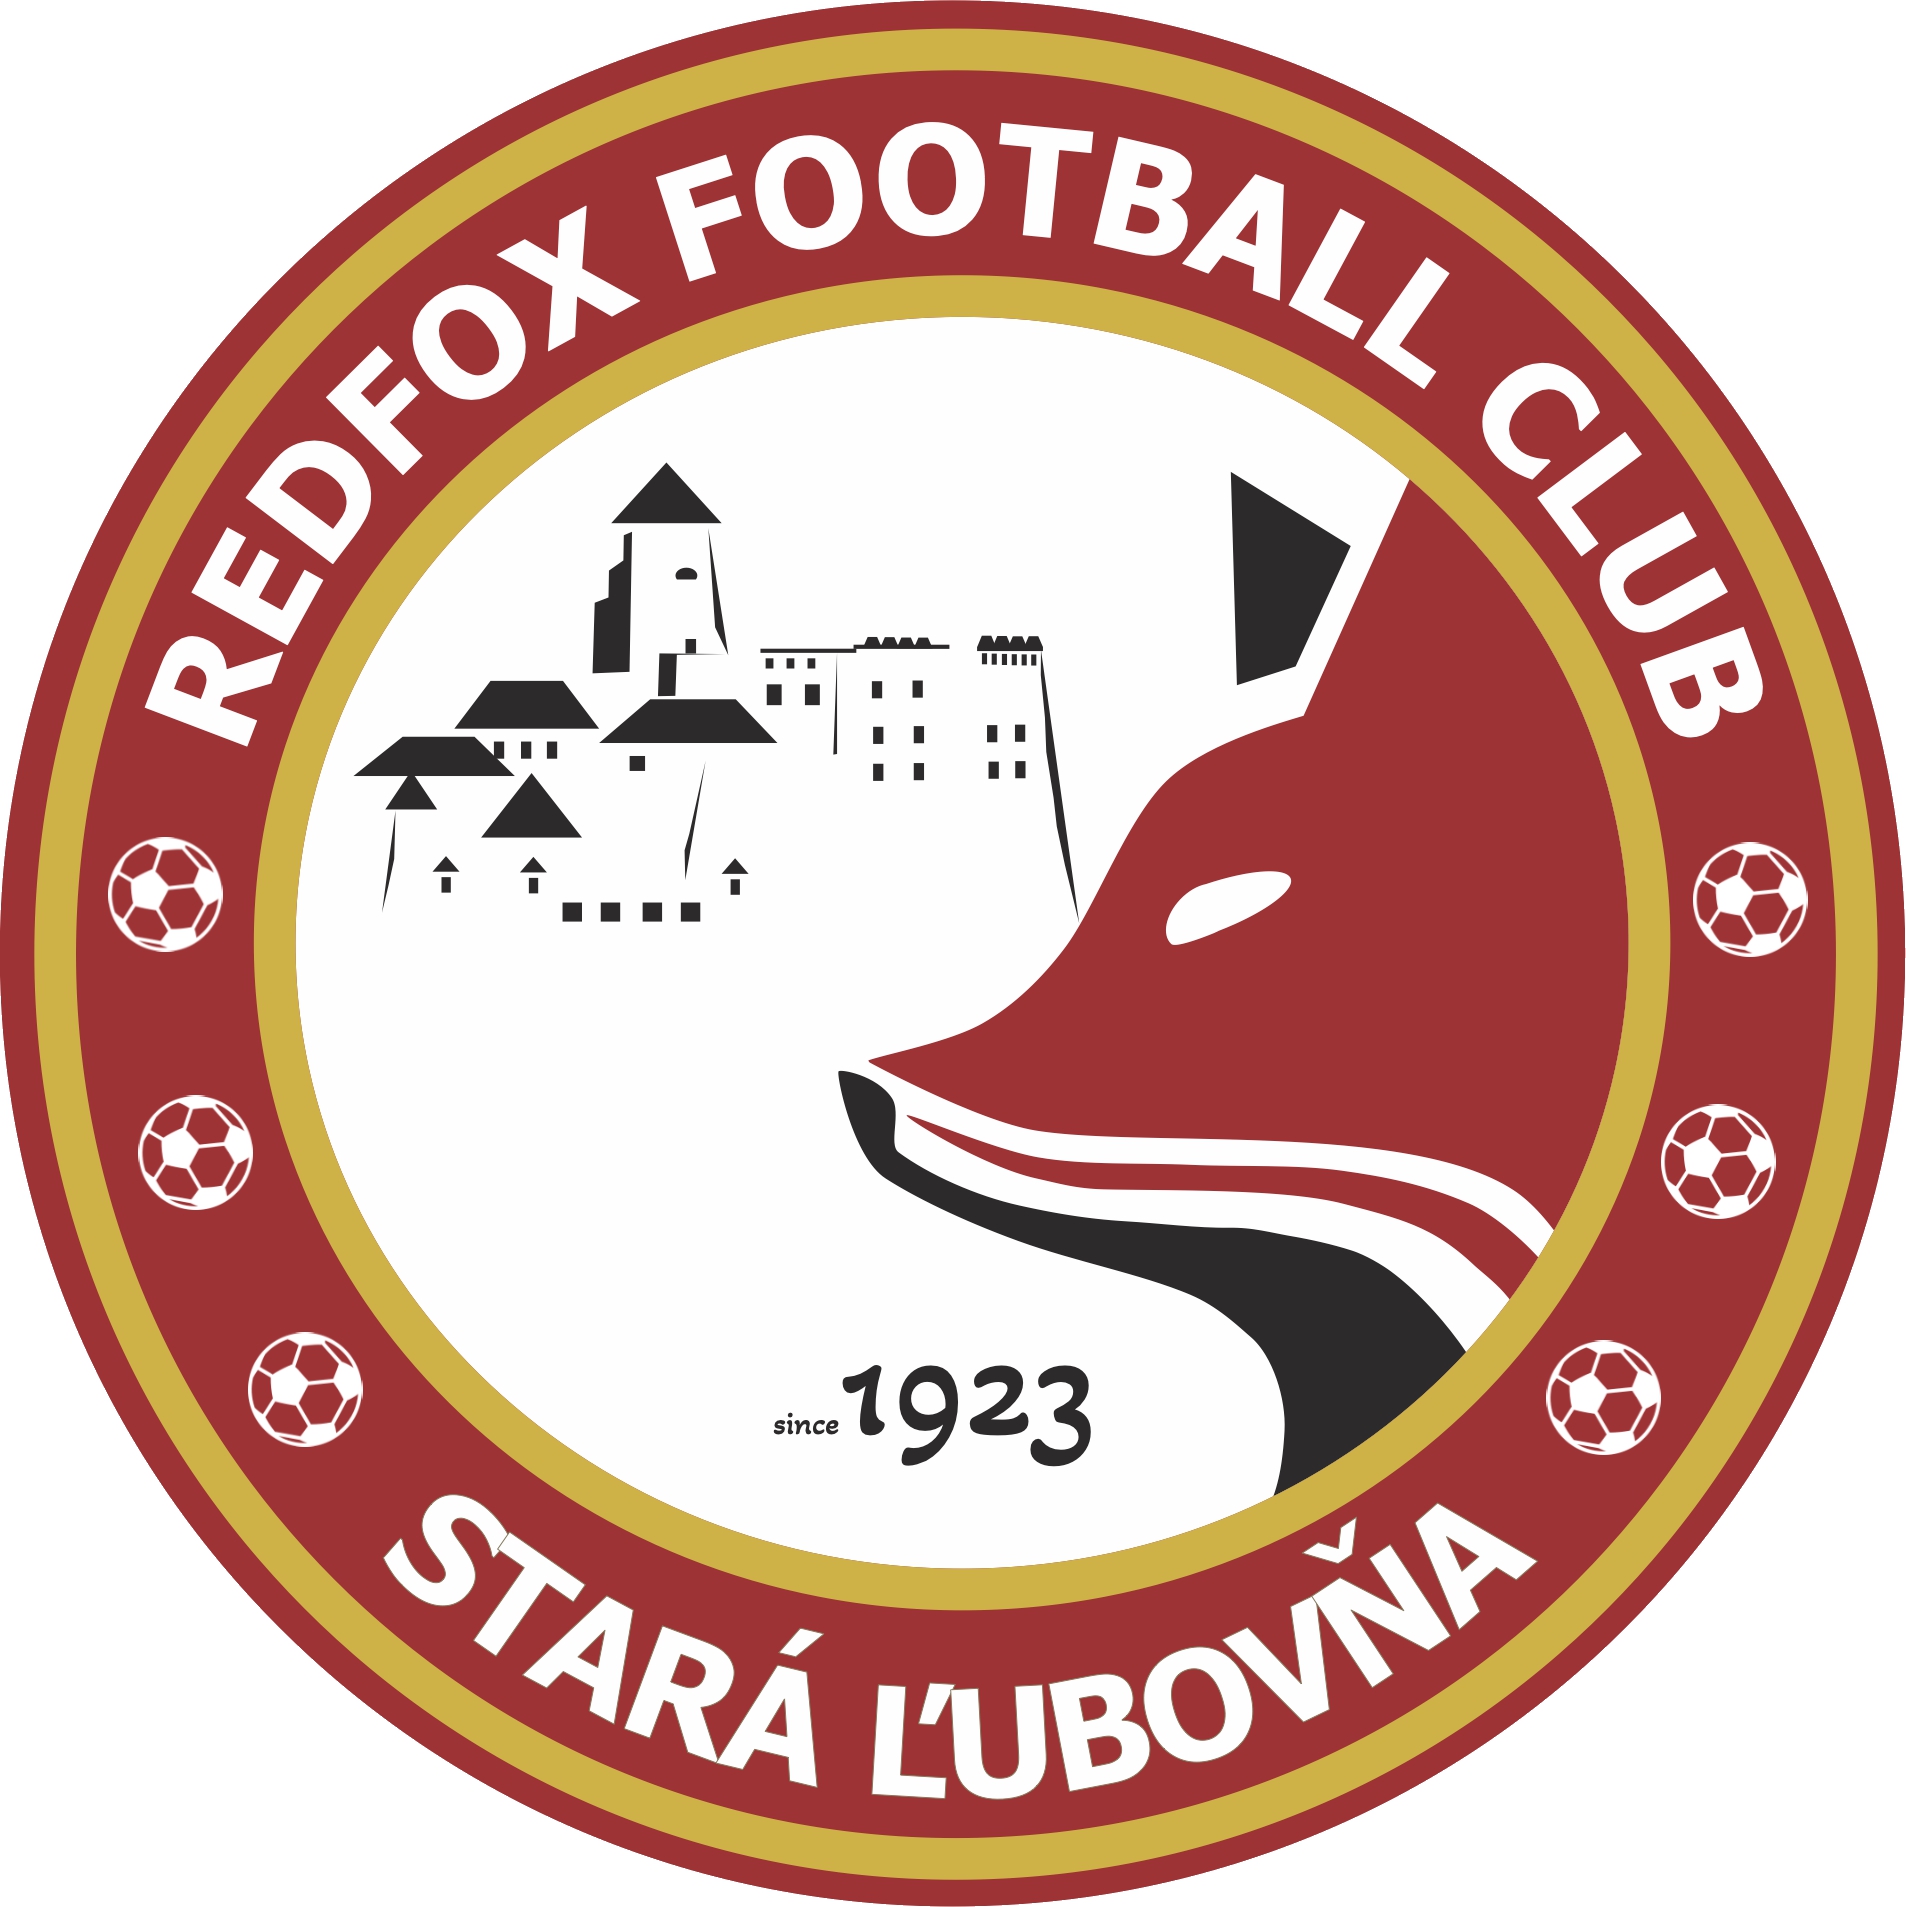 Stará Ľubovňa Redfox Football Club